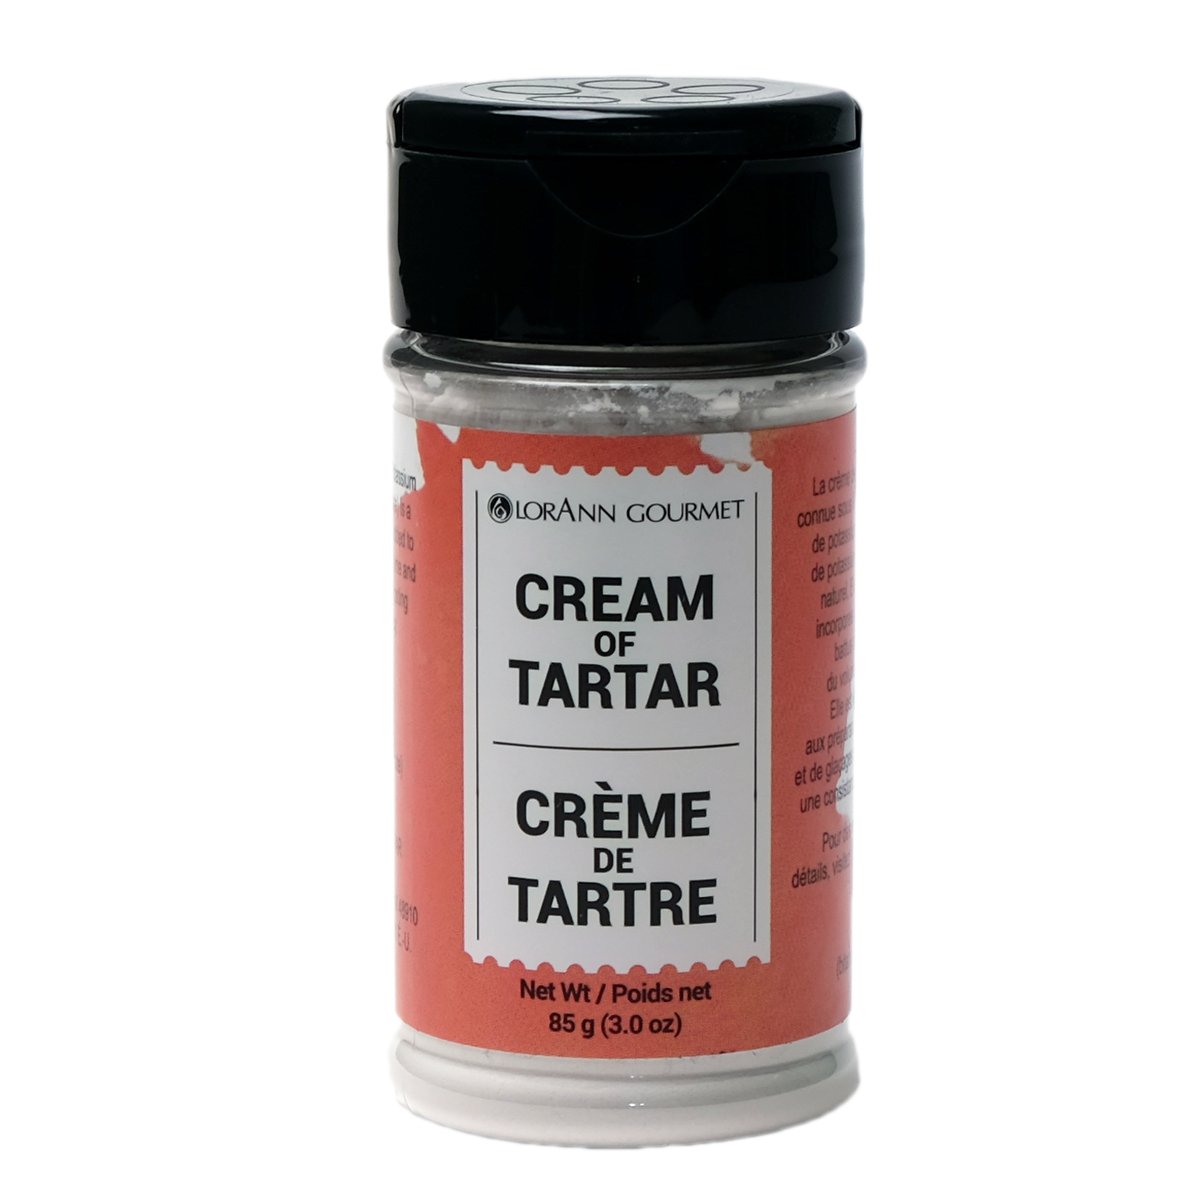 Cream of Tartar (Potassium Bitartrate) 3oz - Bake Supply Plus